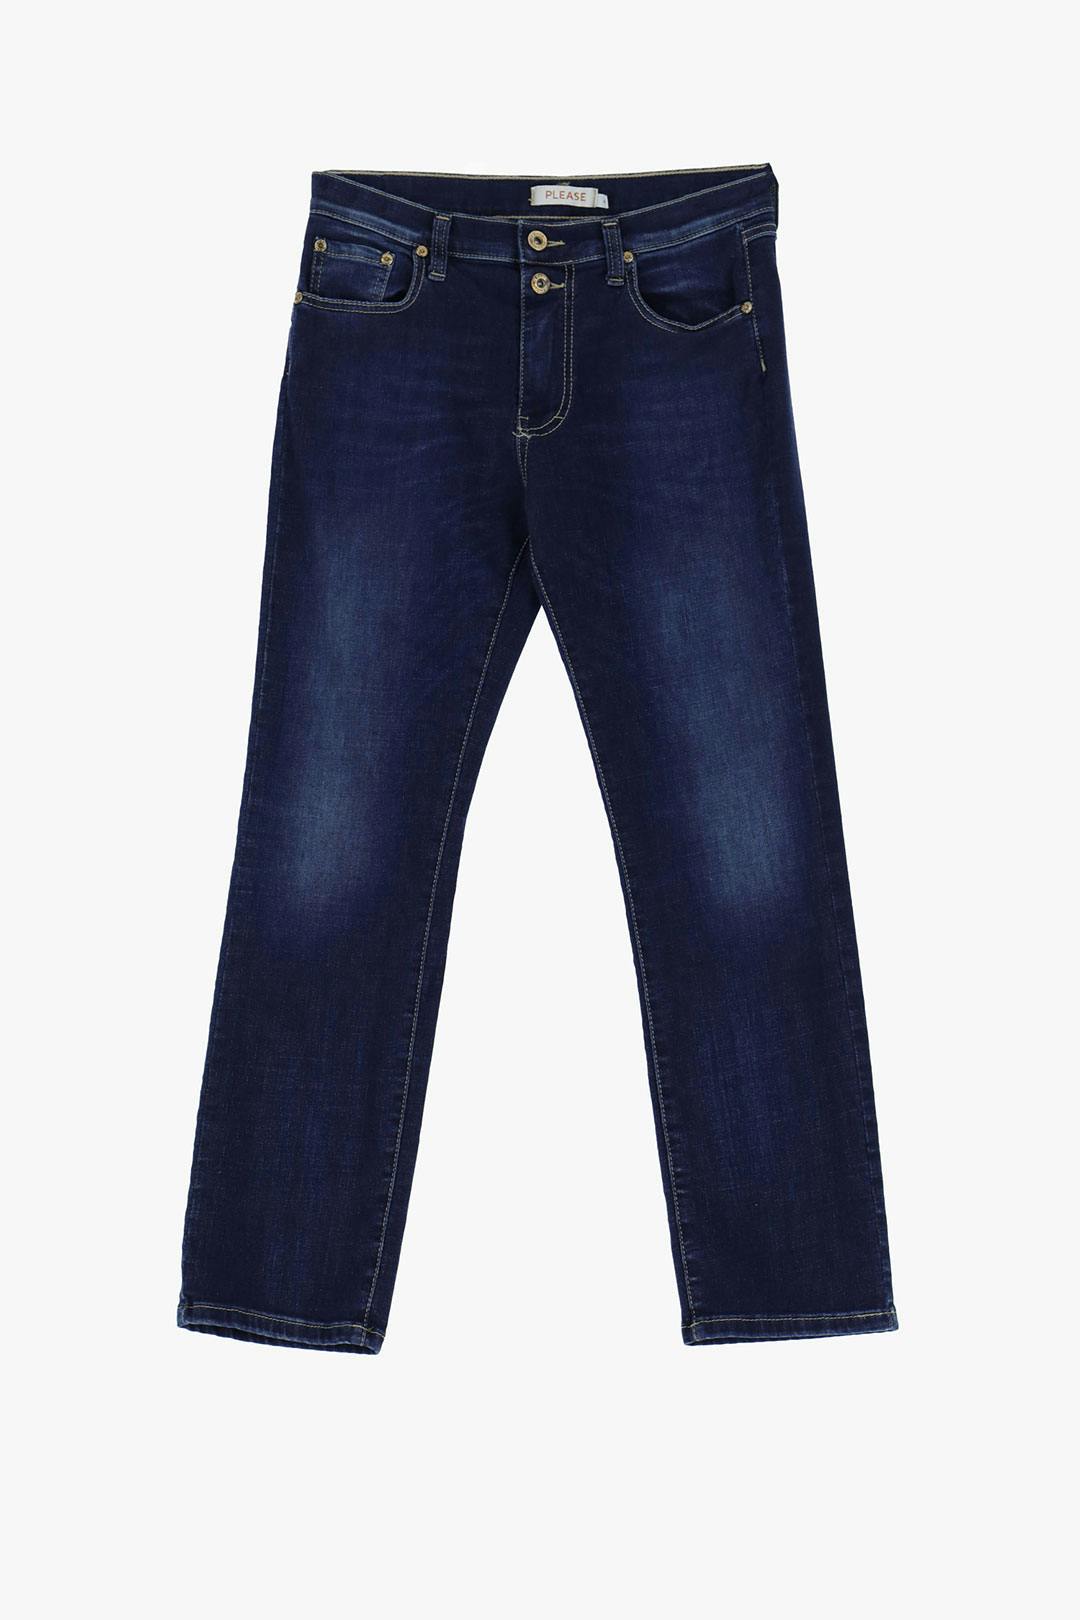 New 2B bologna jeans